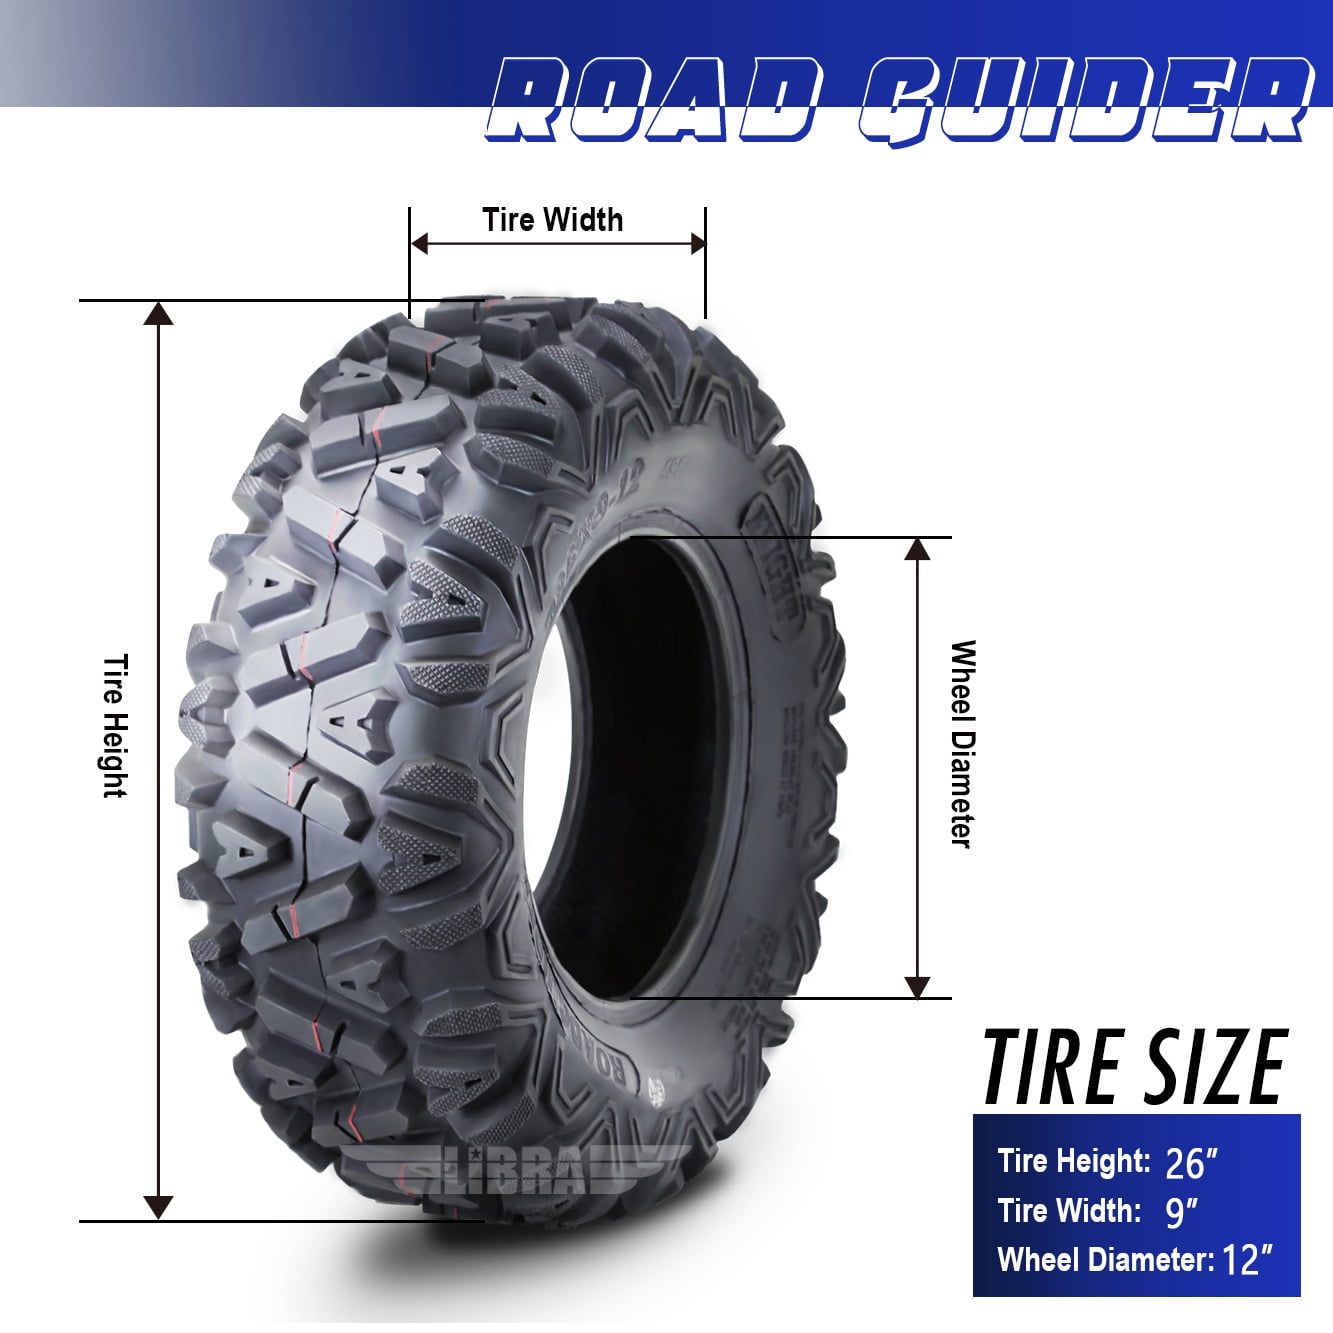 Tire Type: ATV/UTV Tire Application: Sand ITP618 Tire Size: 26x9x12 Position: Front Front ITP Sand Star Tire Tire Construction: Bias Rim Size: 12 Tire Ply: 2 26x9x12 